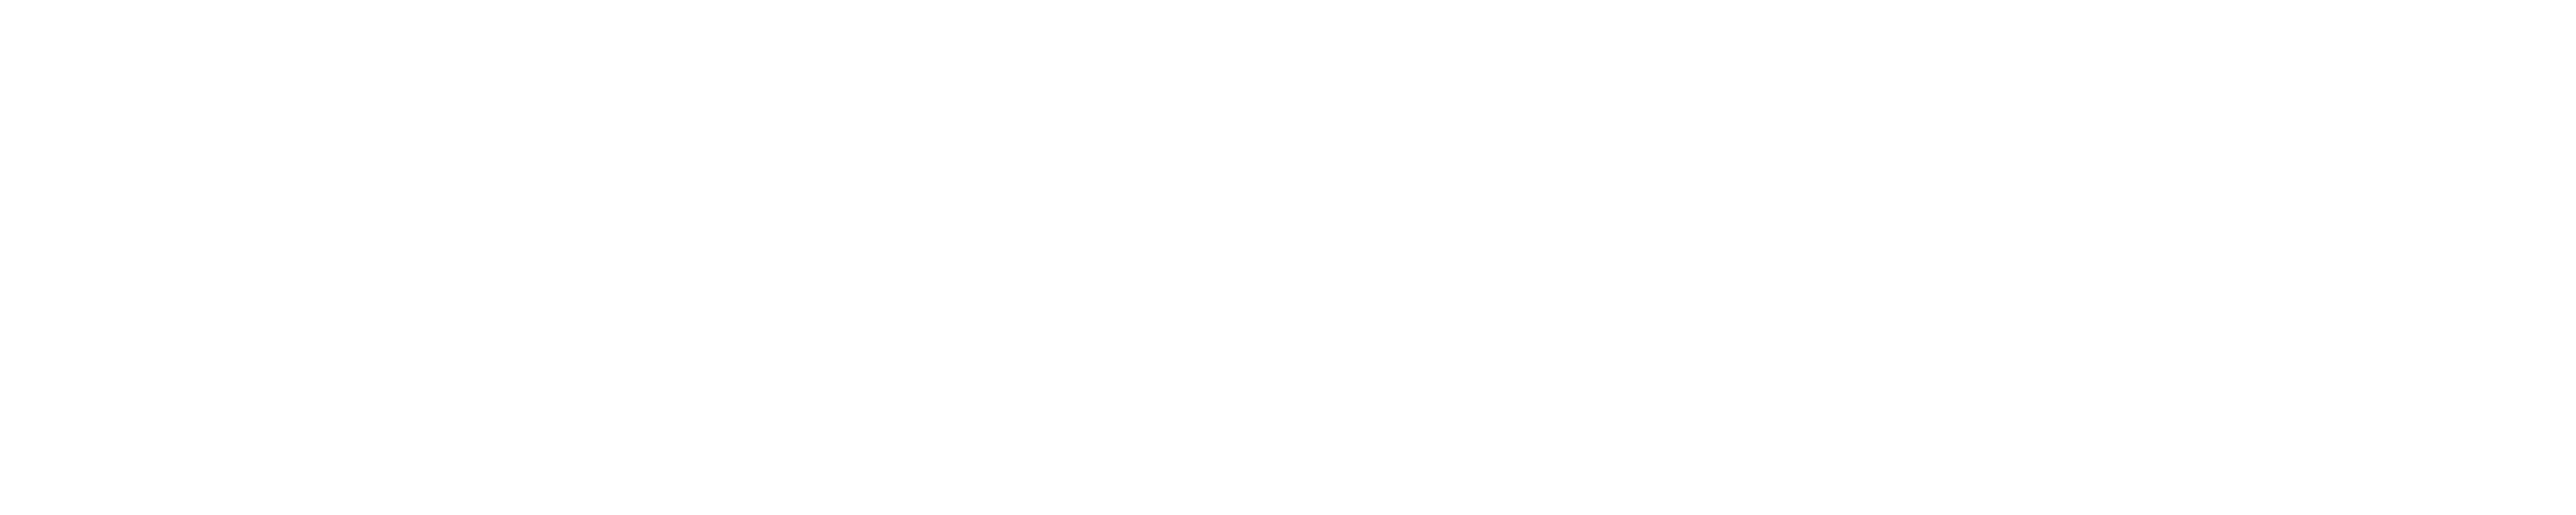 dark-blue-notes